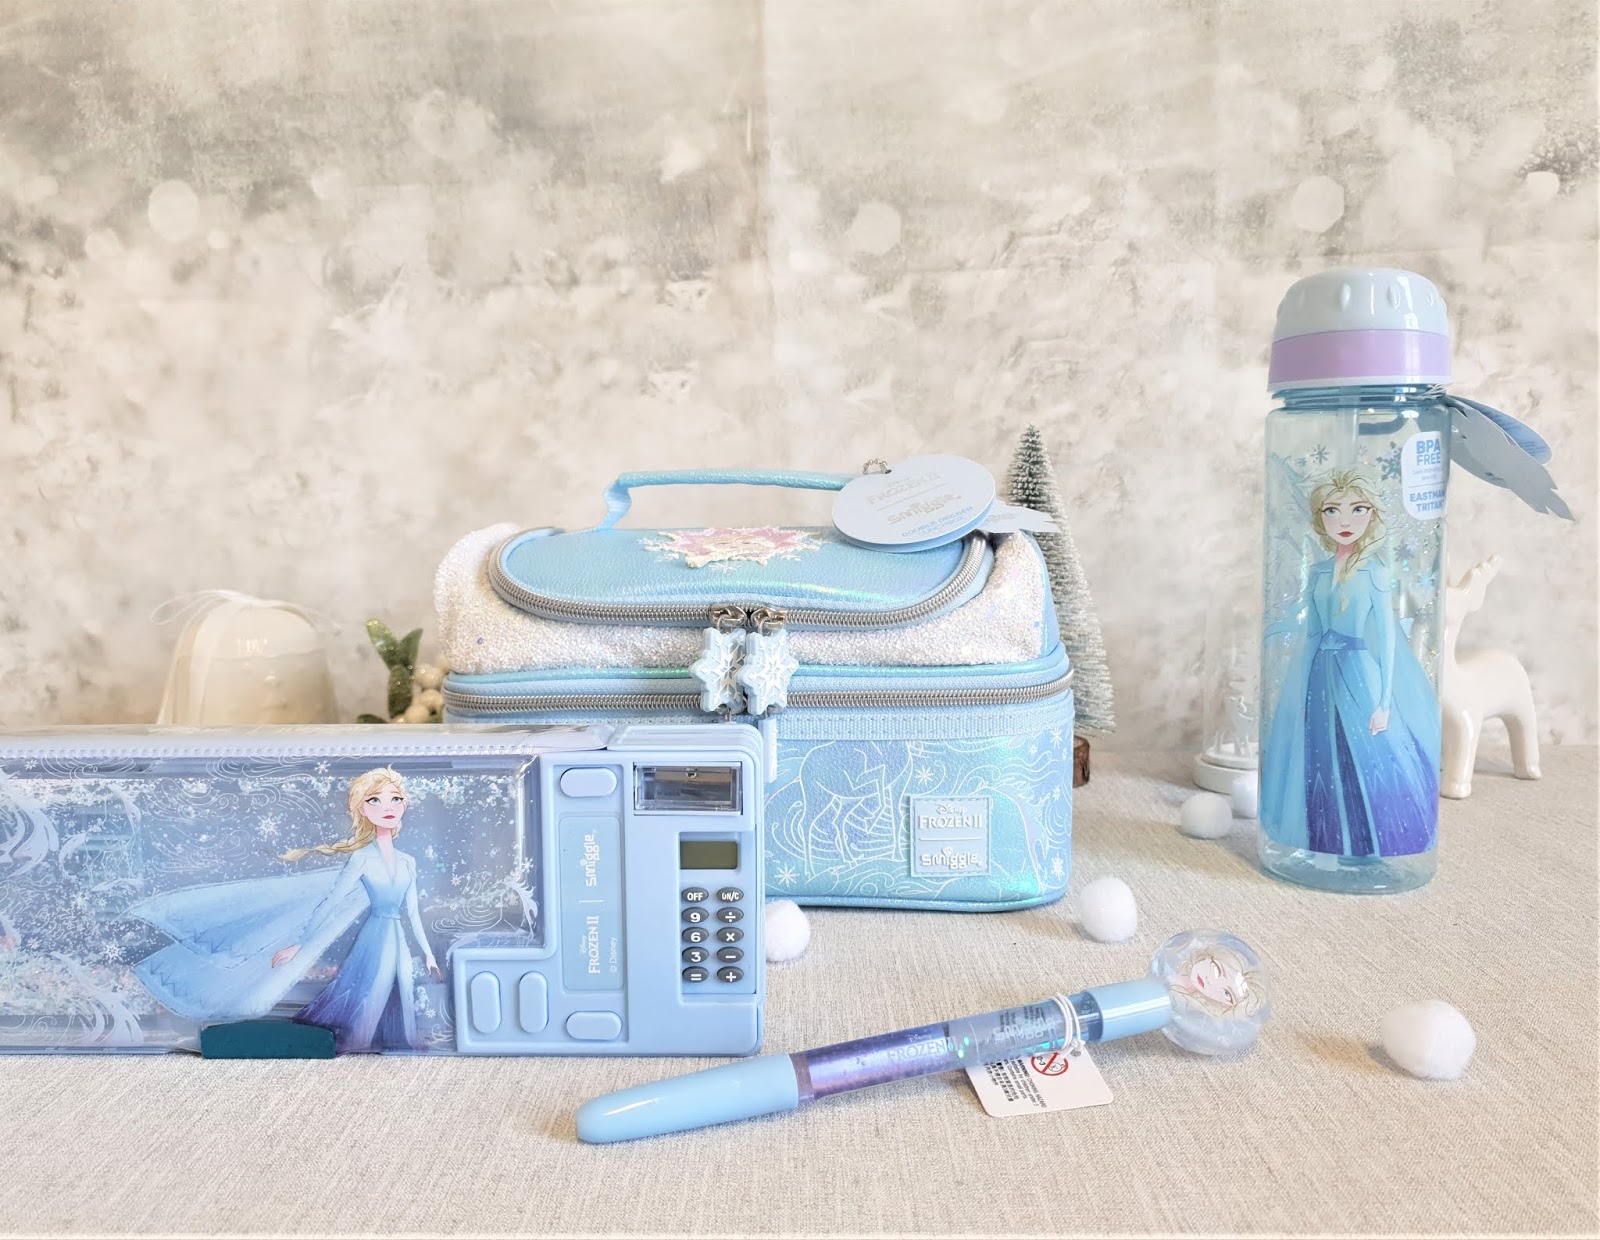 Disney Frozen Girl's Elsa Compartment Soft Lunch Box (Blue/Magic)